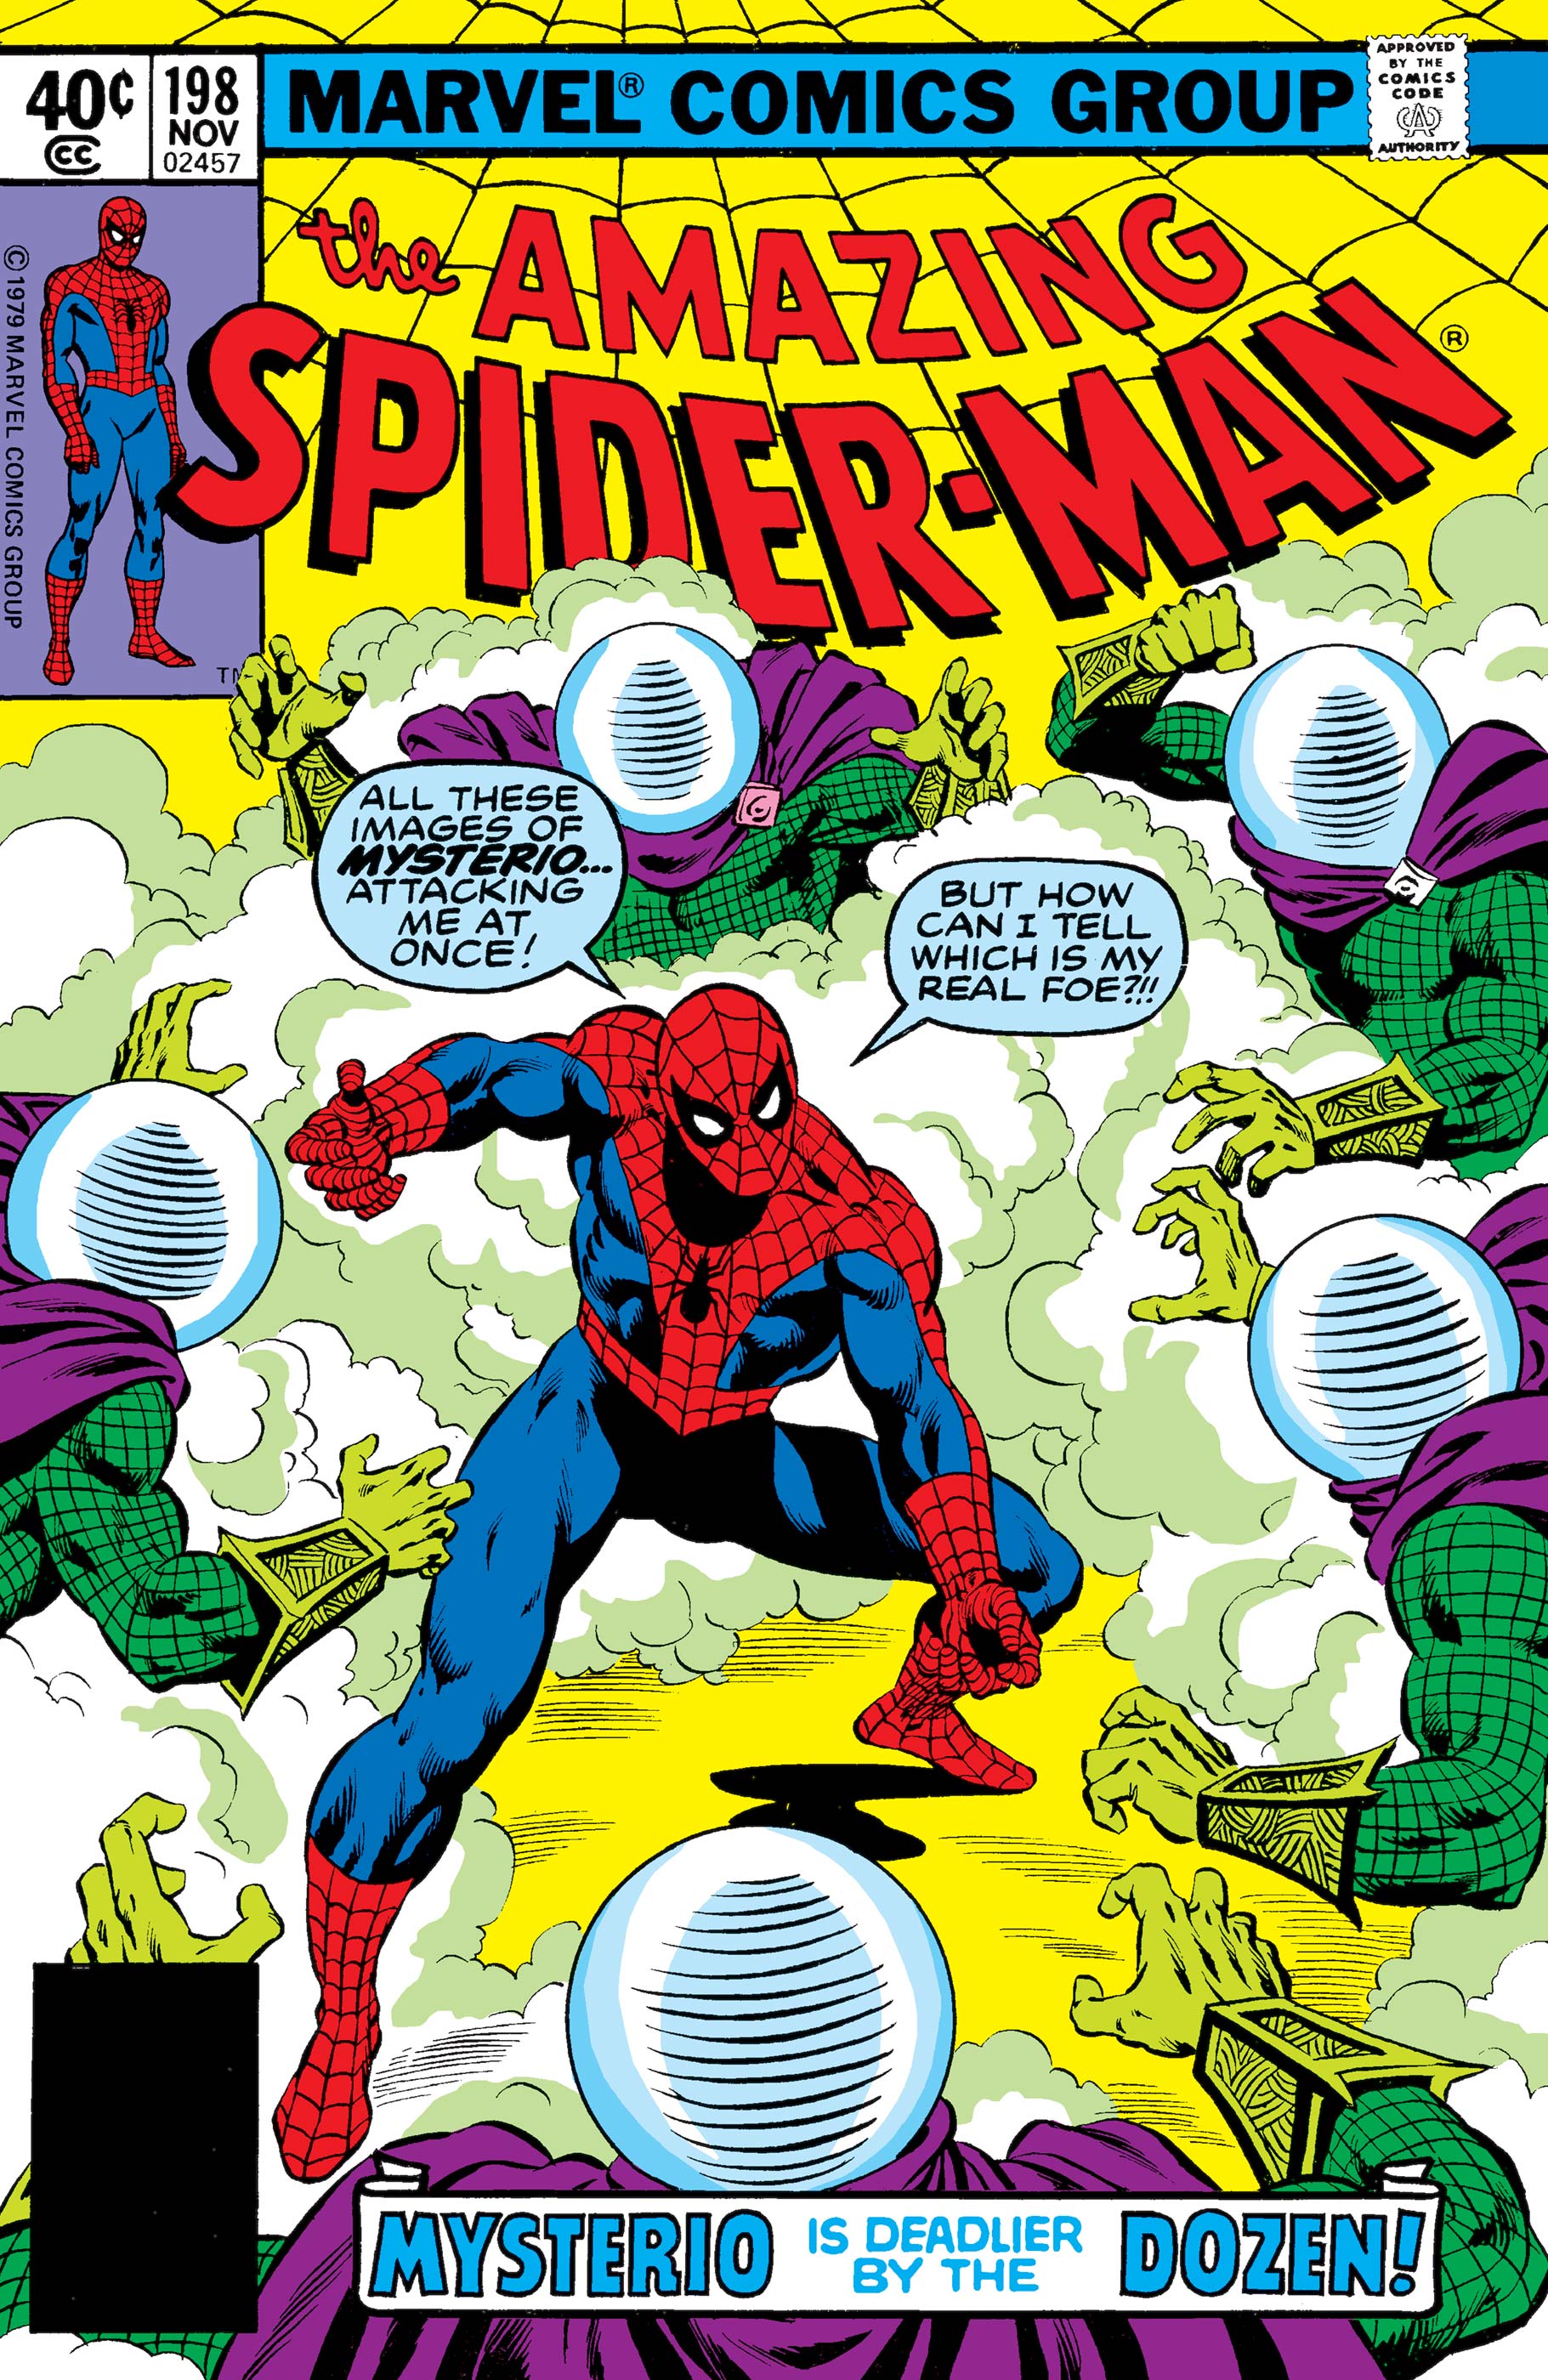 The Amazing Spider-Man (1963) #198